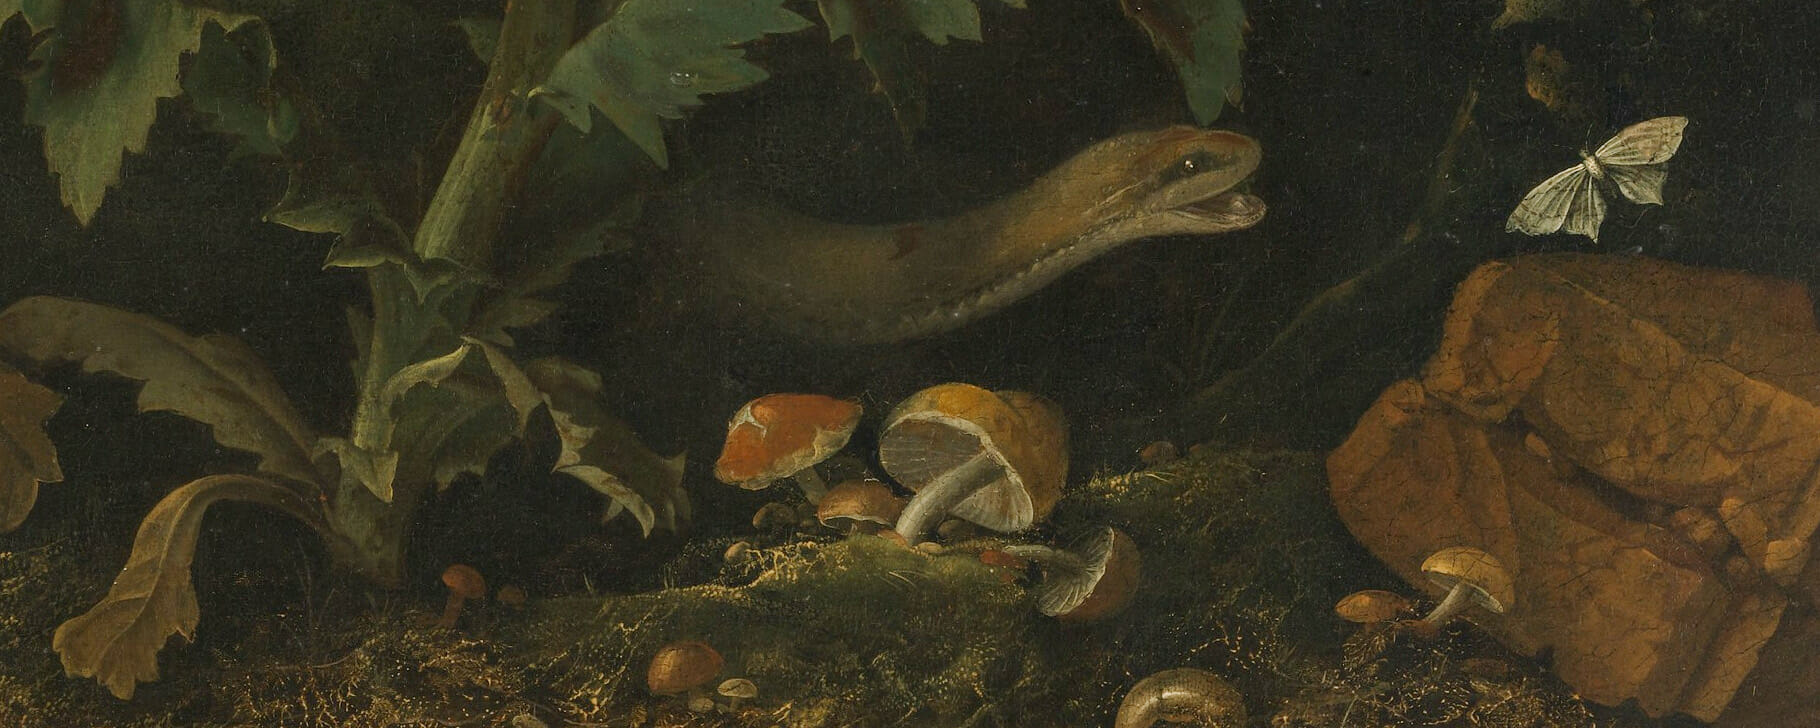 Snake painting detail